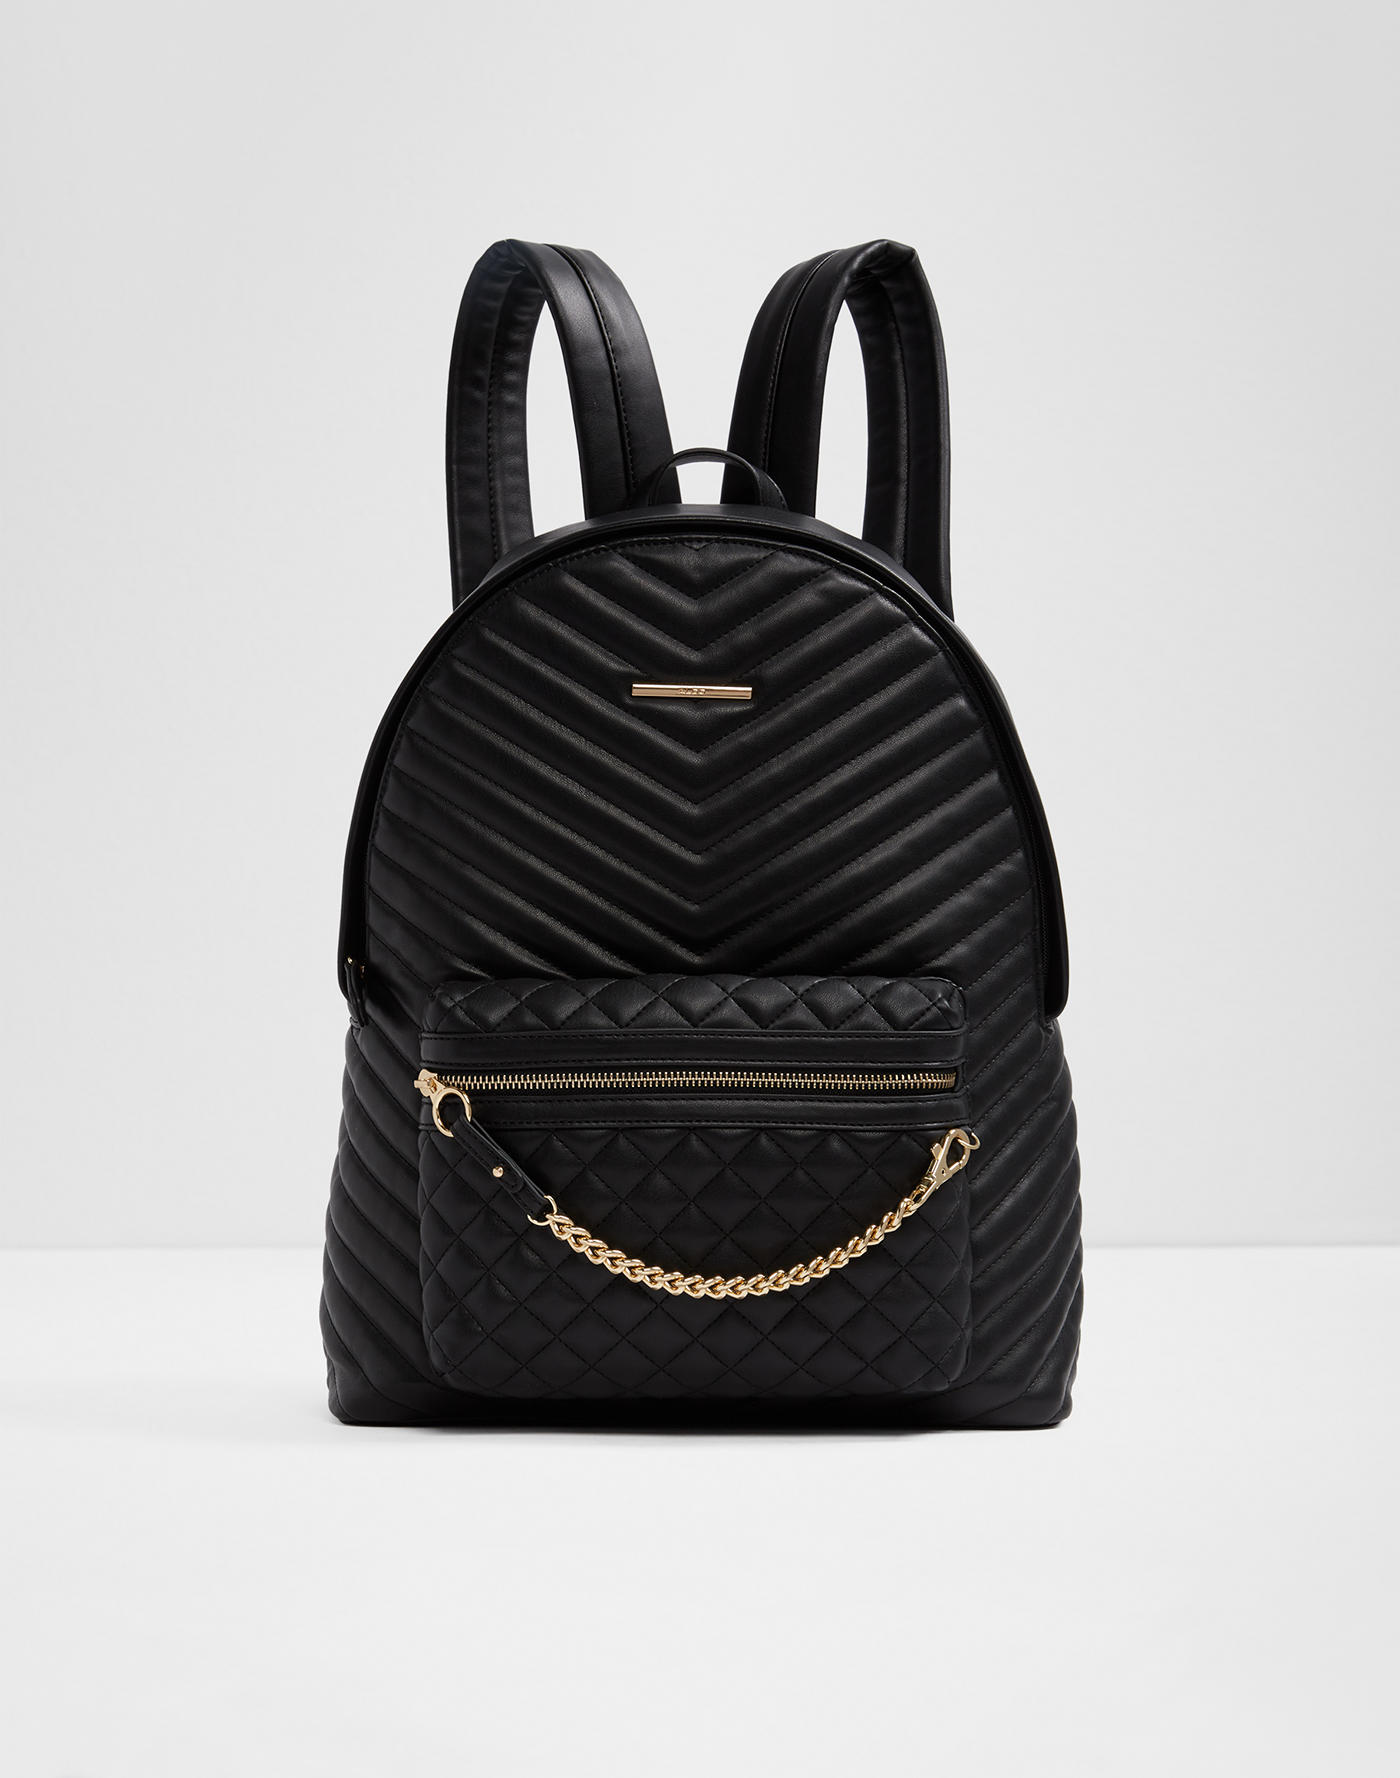 Sale Handbags | Aldoshoes.com US